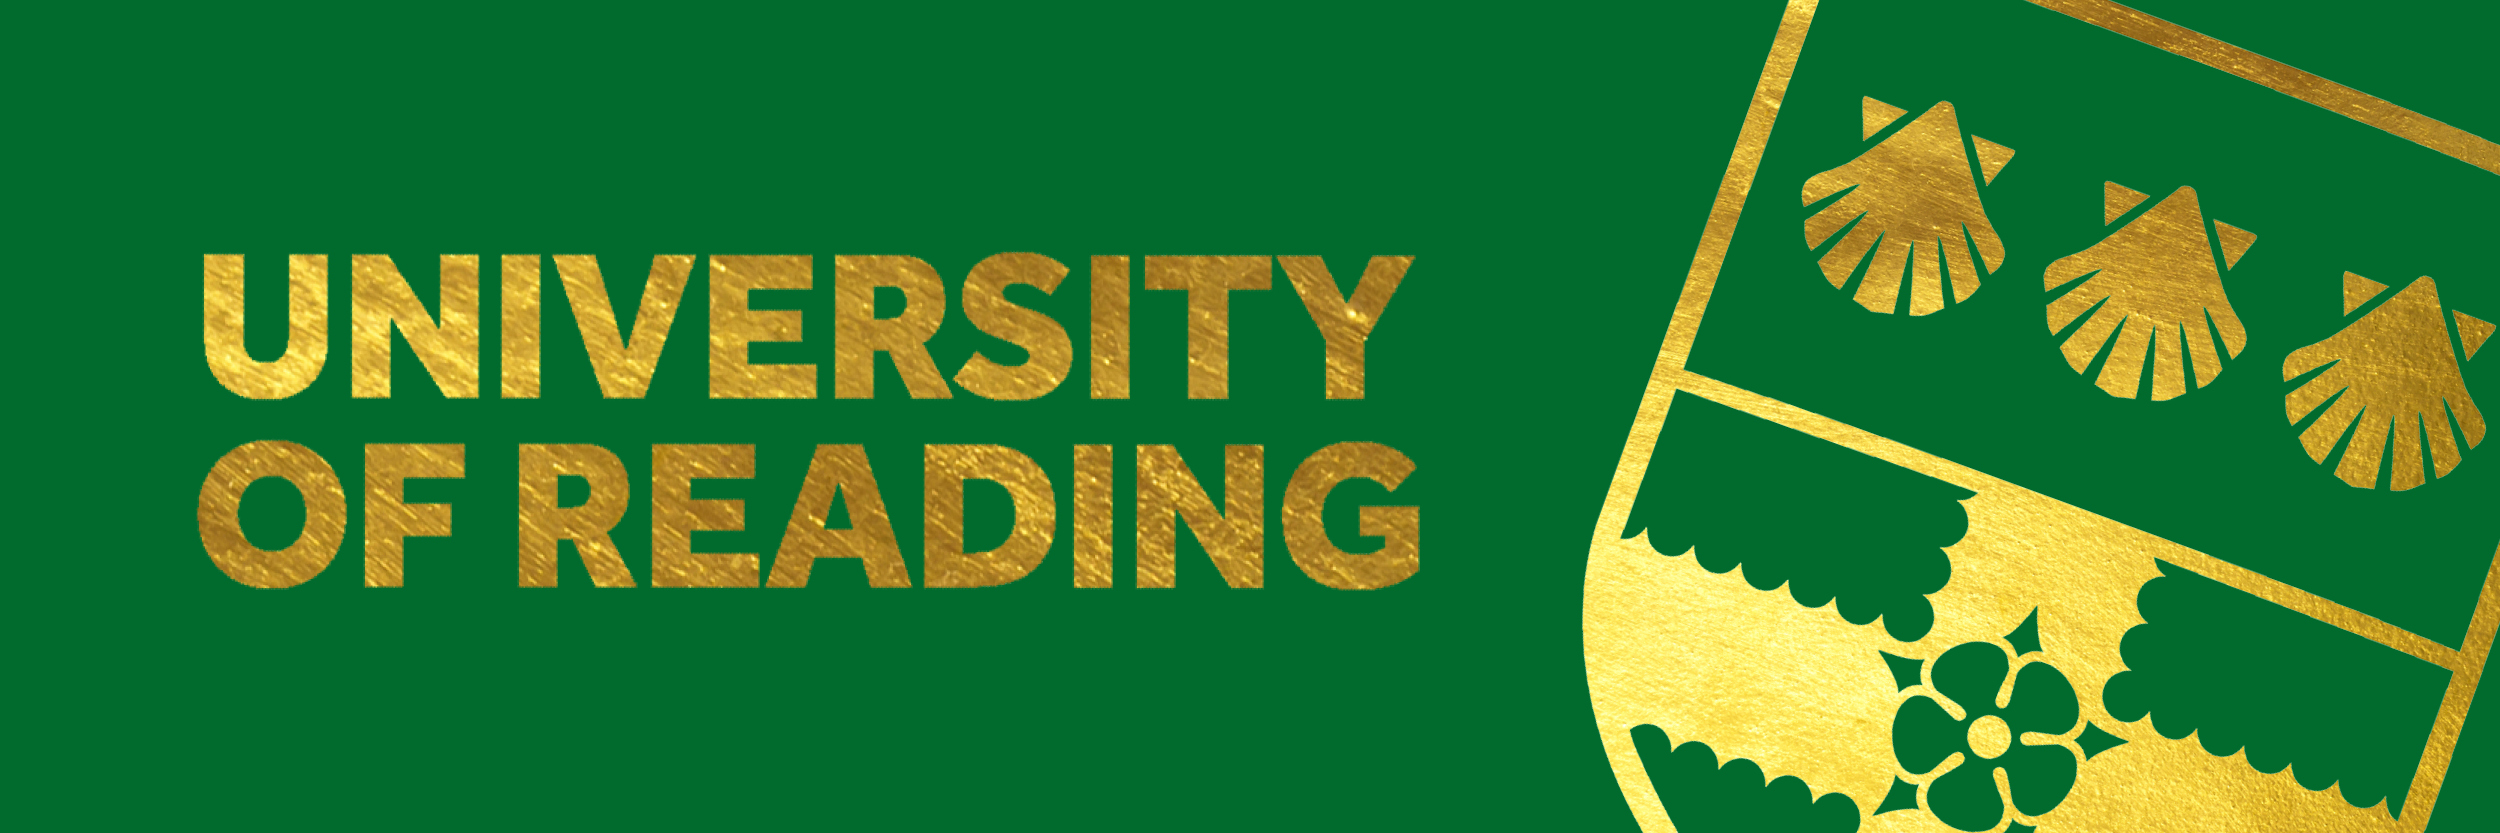 University of of Reading logo on a green backdrop